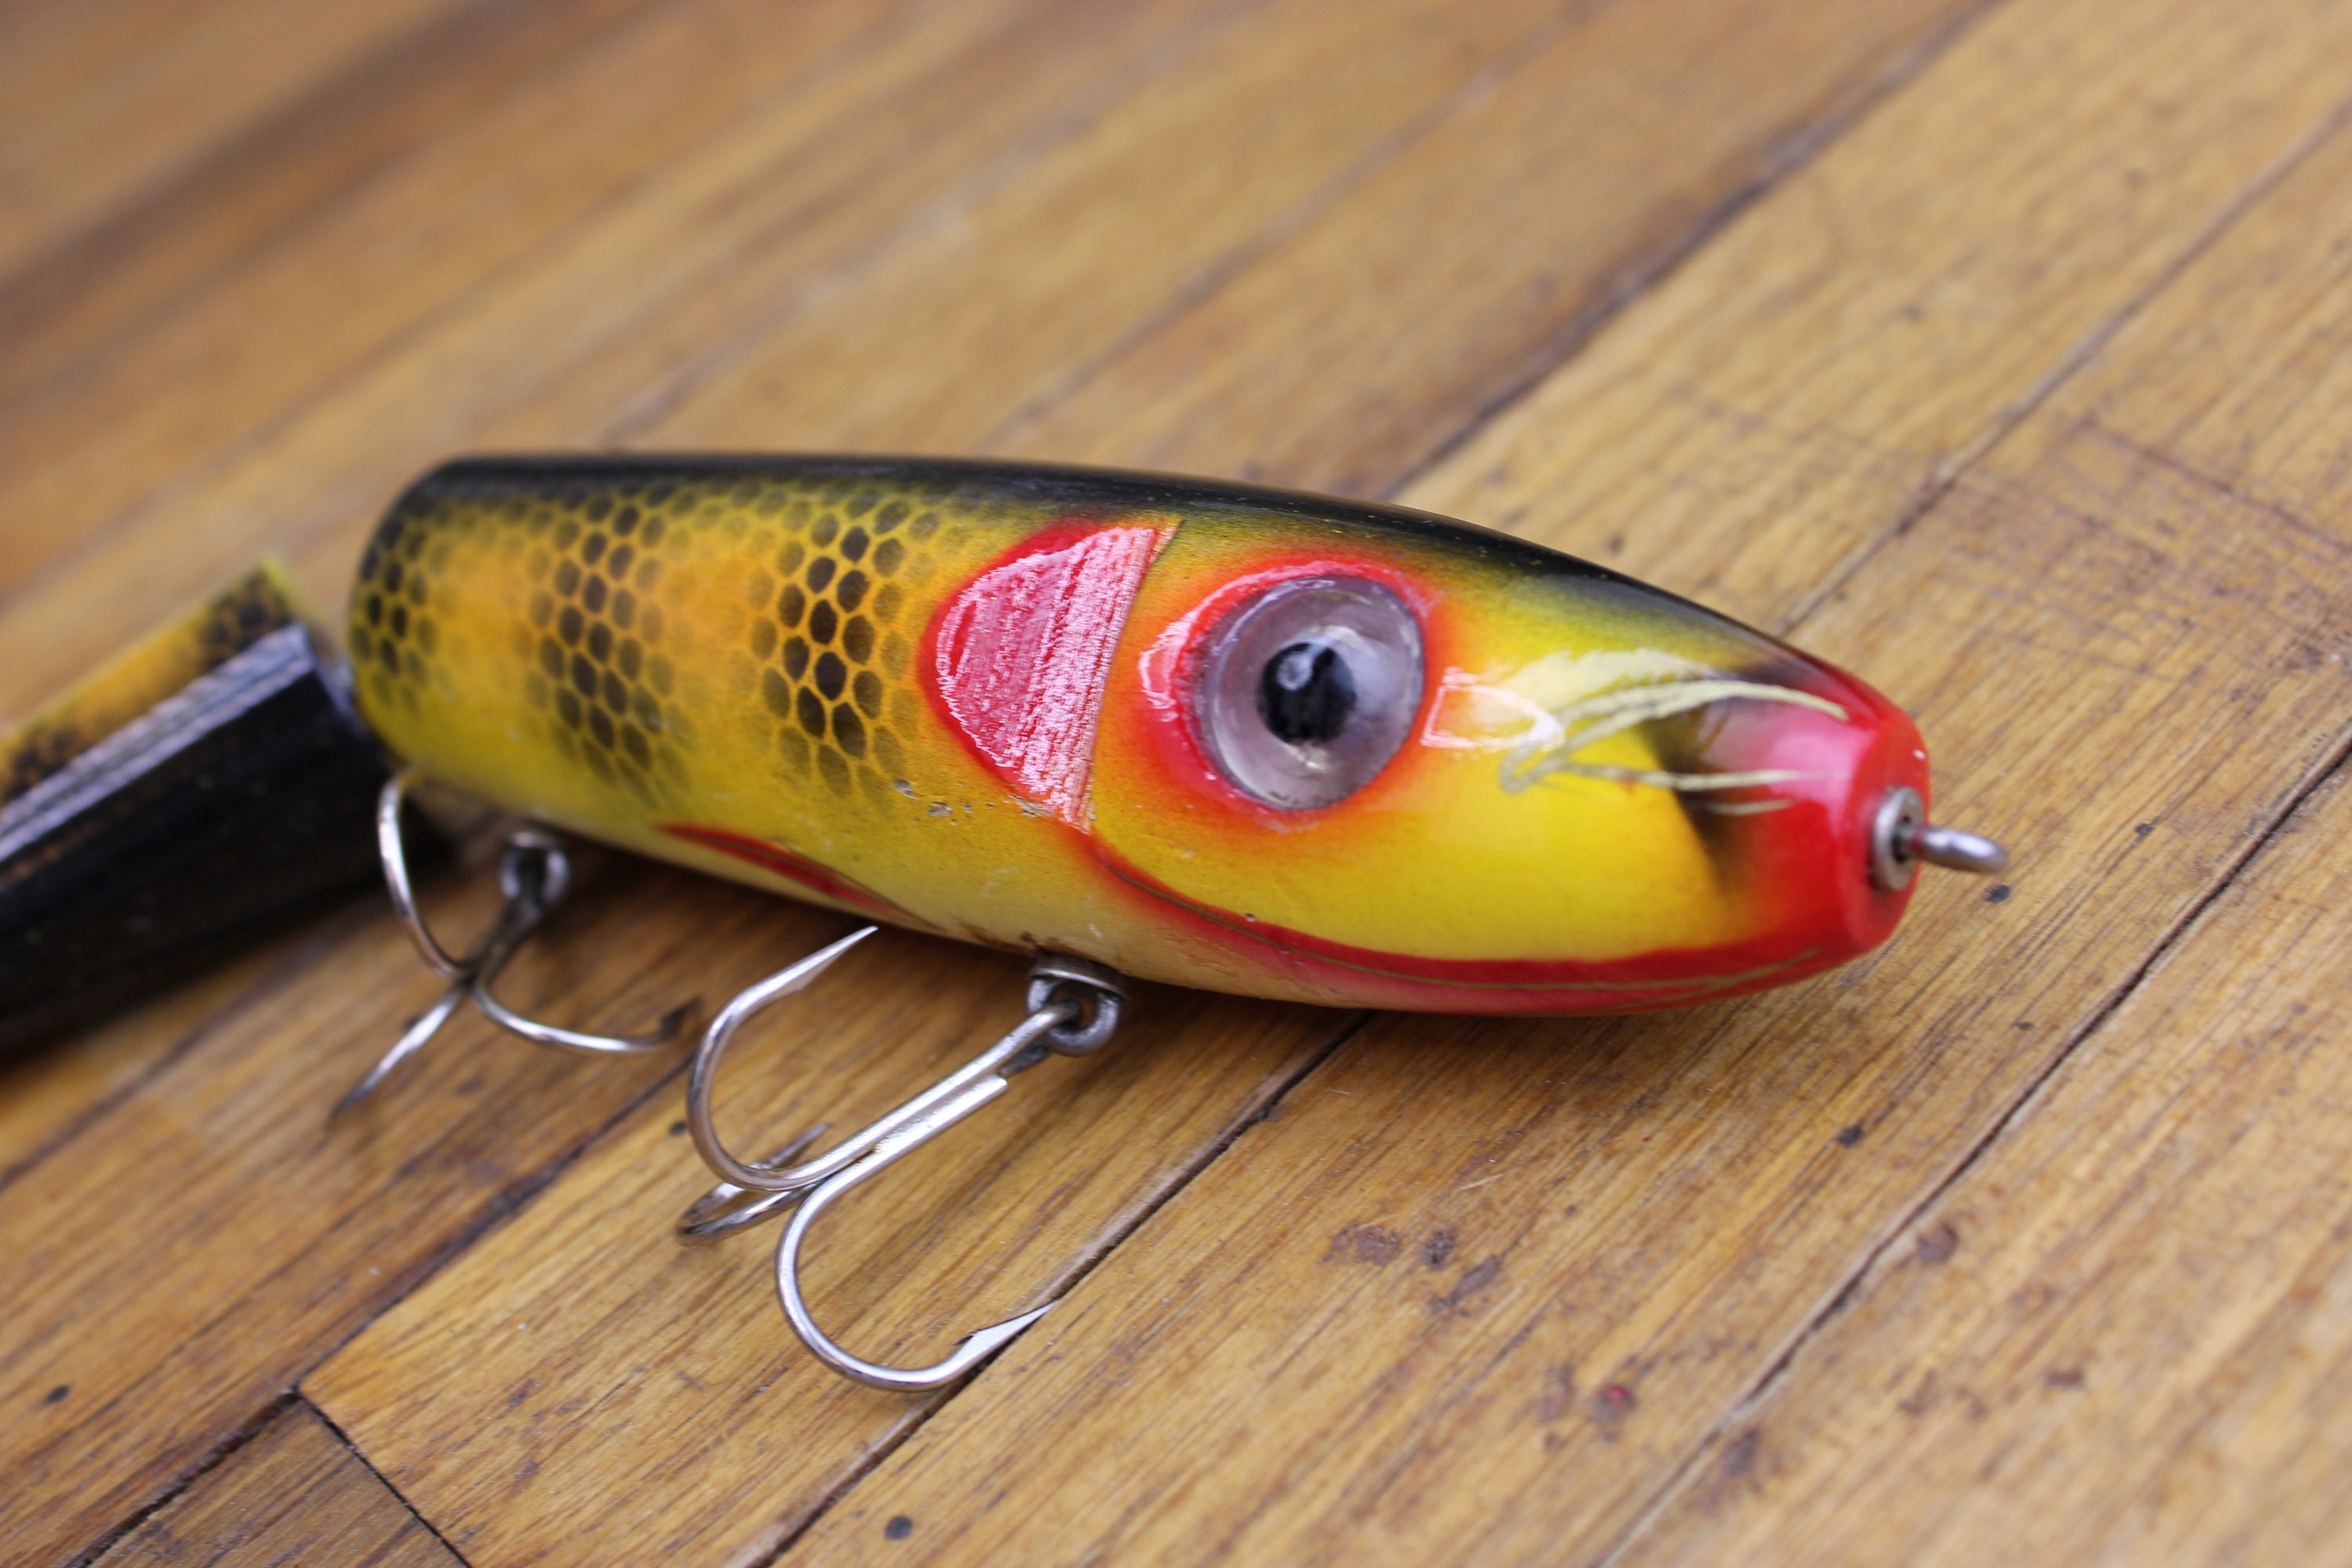 Wood glide baits, Wake baits, & crankbaits made for trophy fish